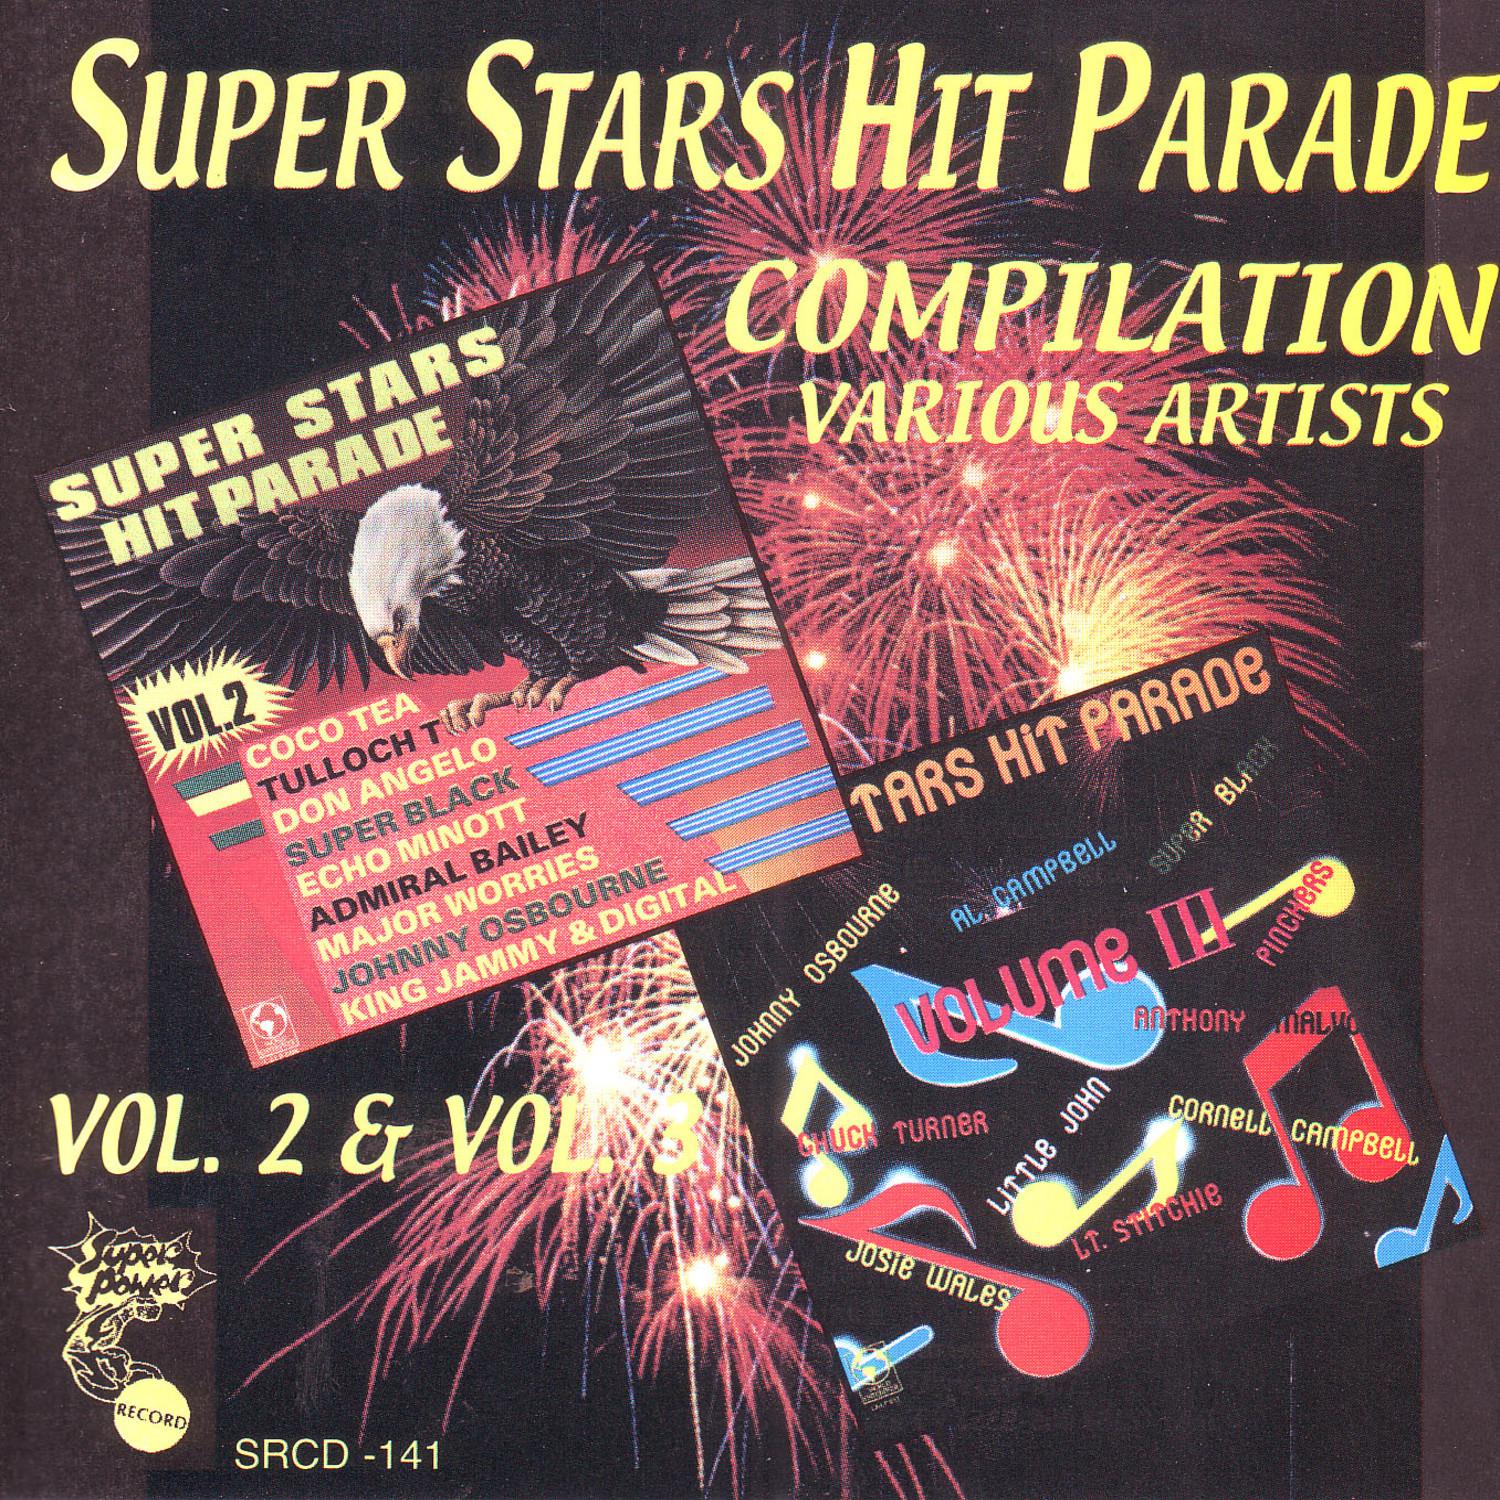 Super Stars Hit Parade Compilation Vol. 2 & Vol. 3